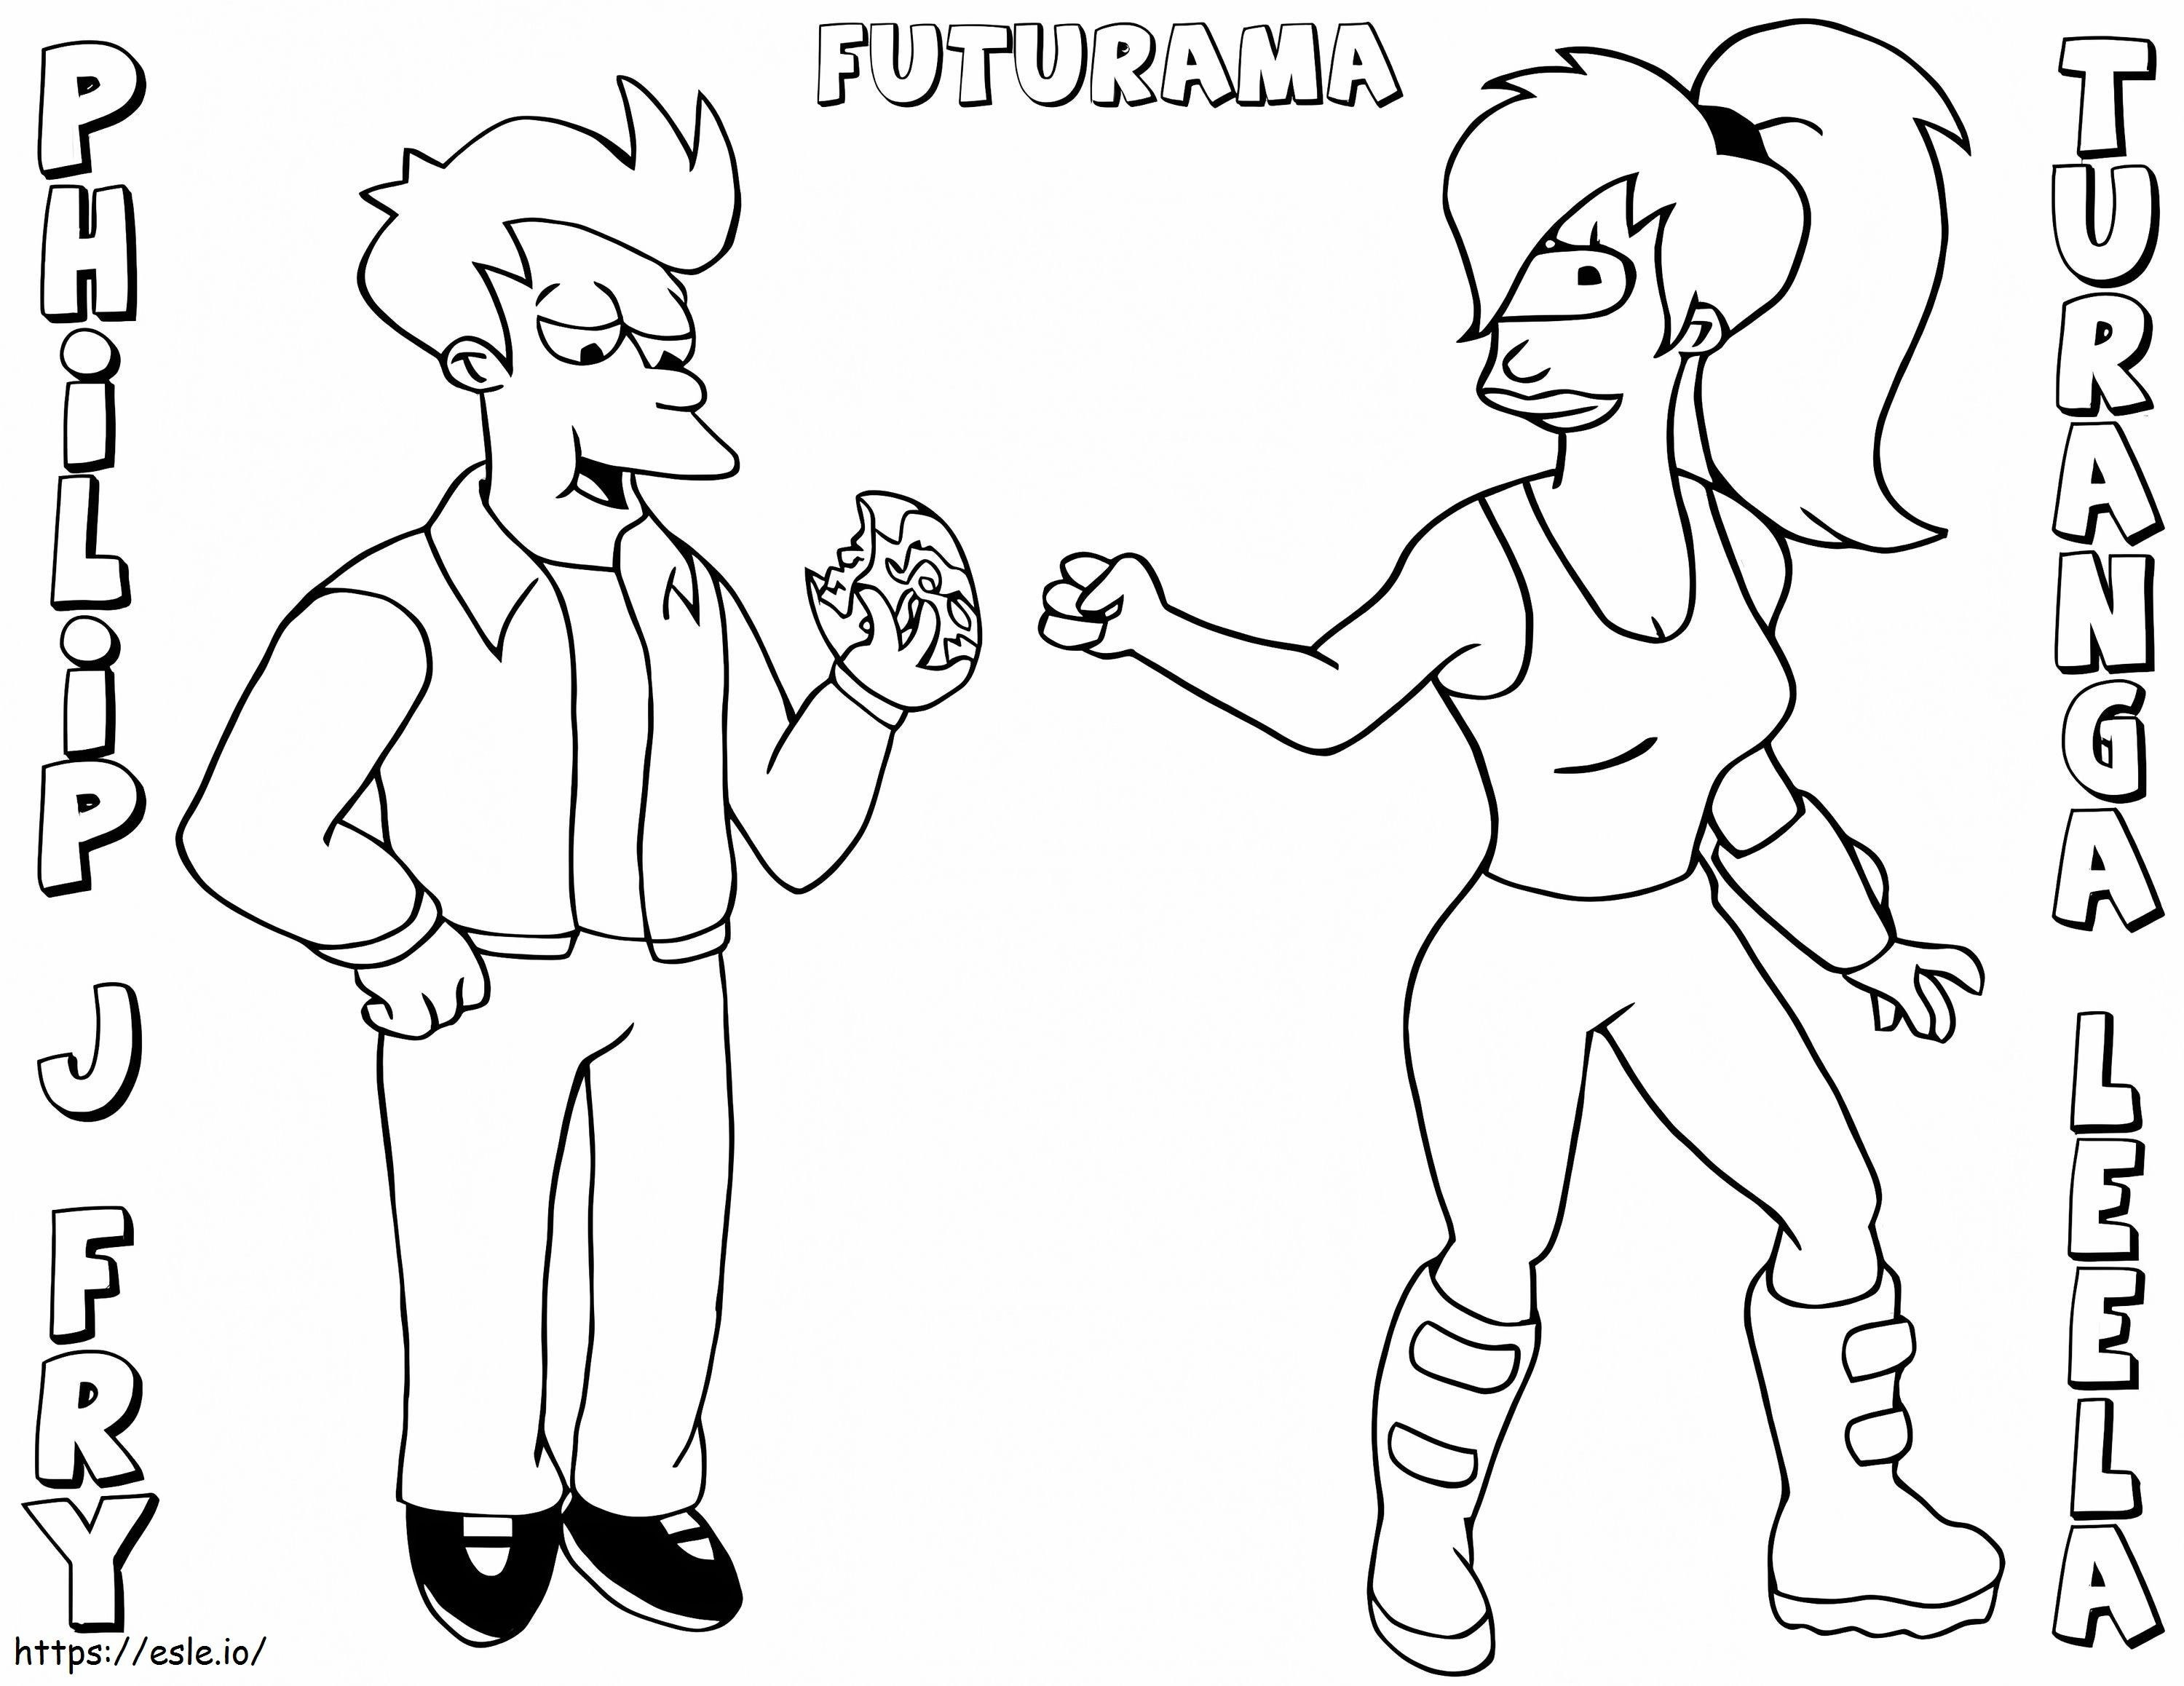 Fry i Leela z Futuramy kolorowanka